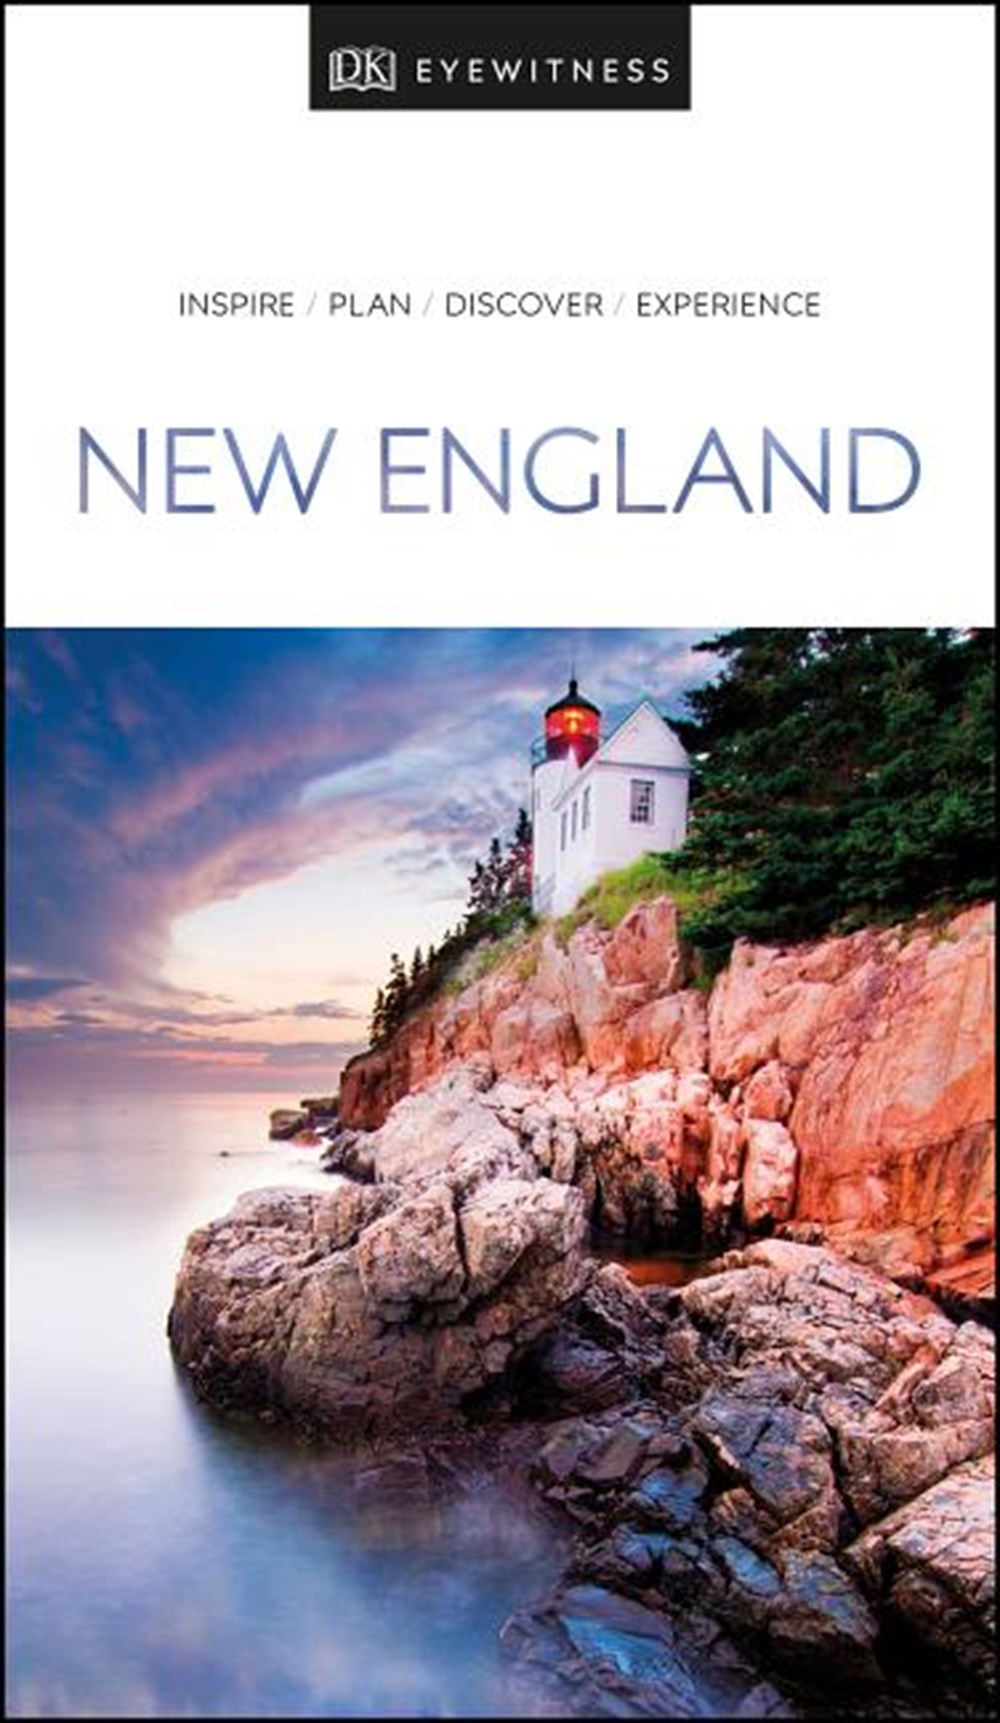 DK Eyewitness Travel Guide New England